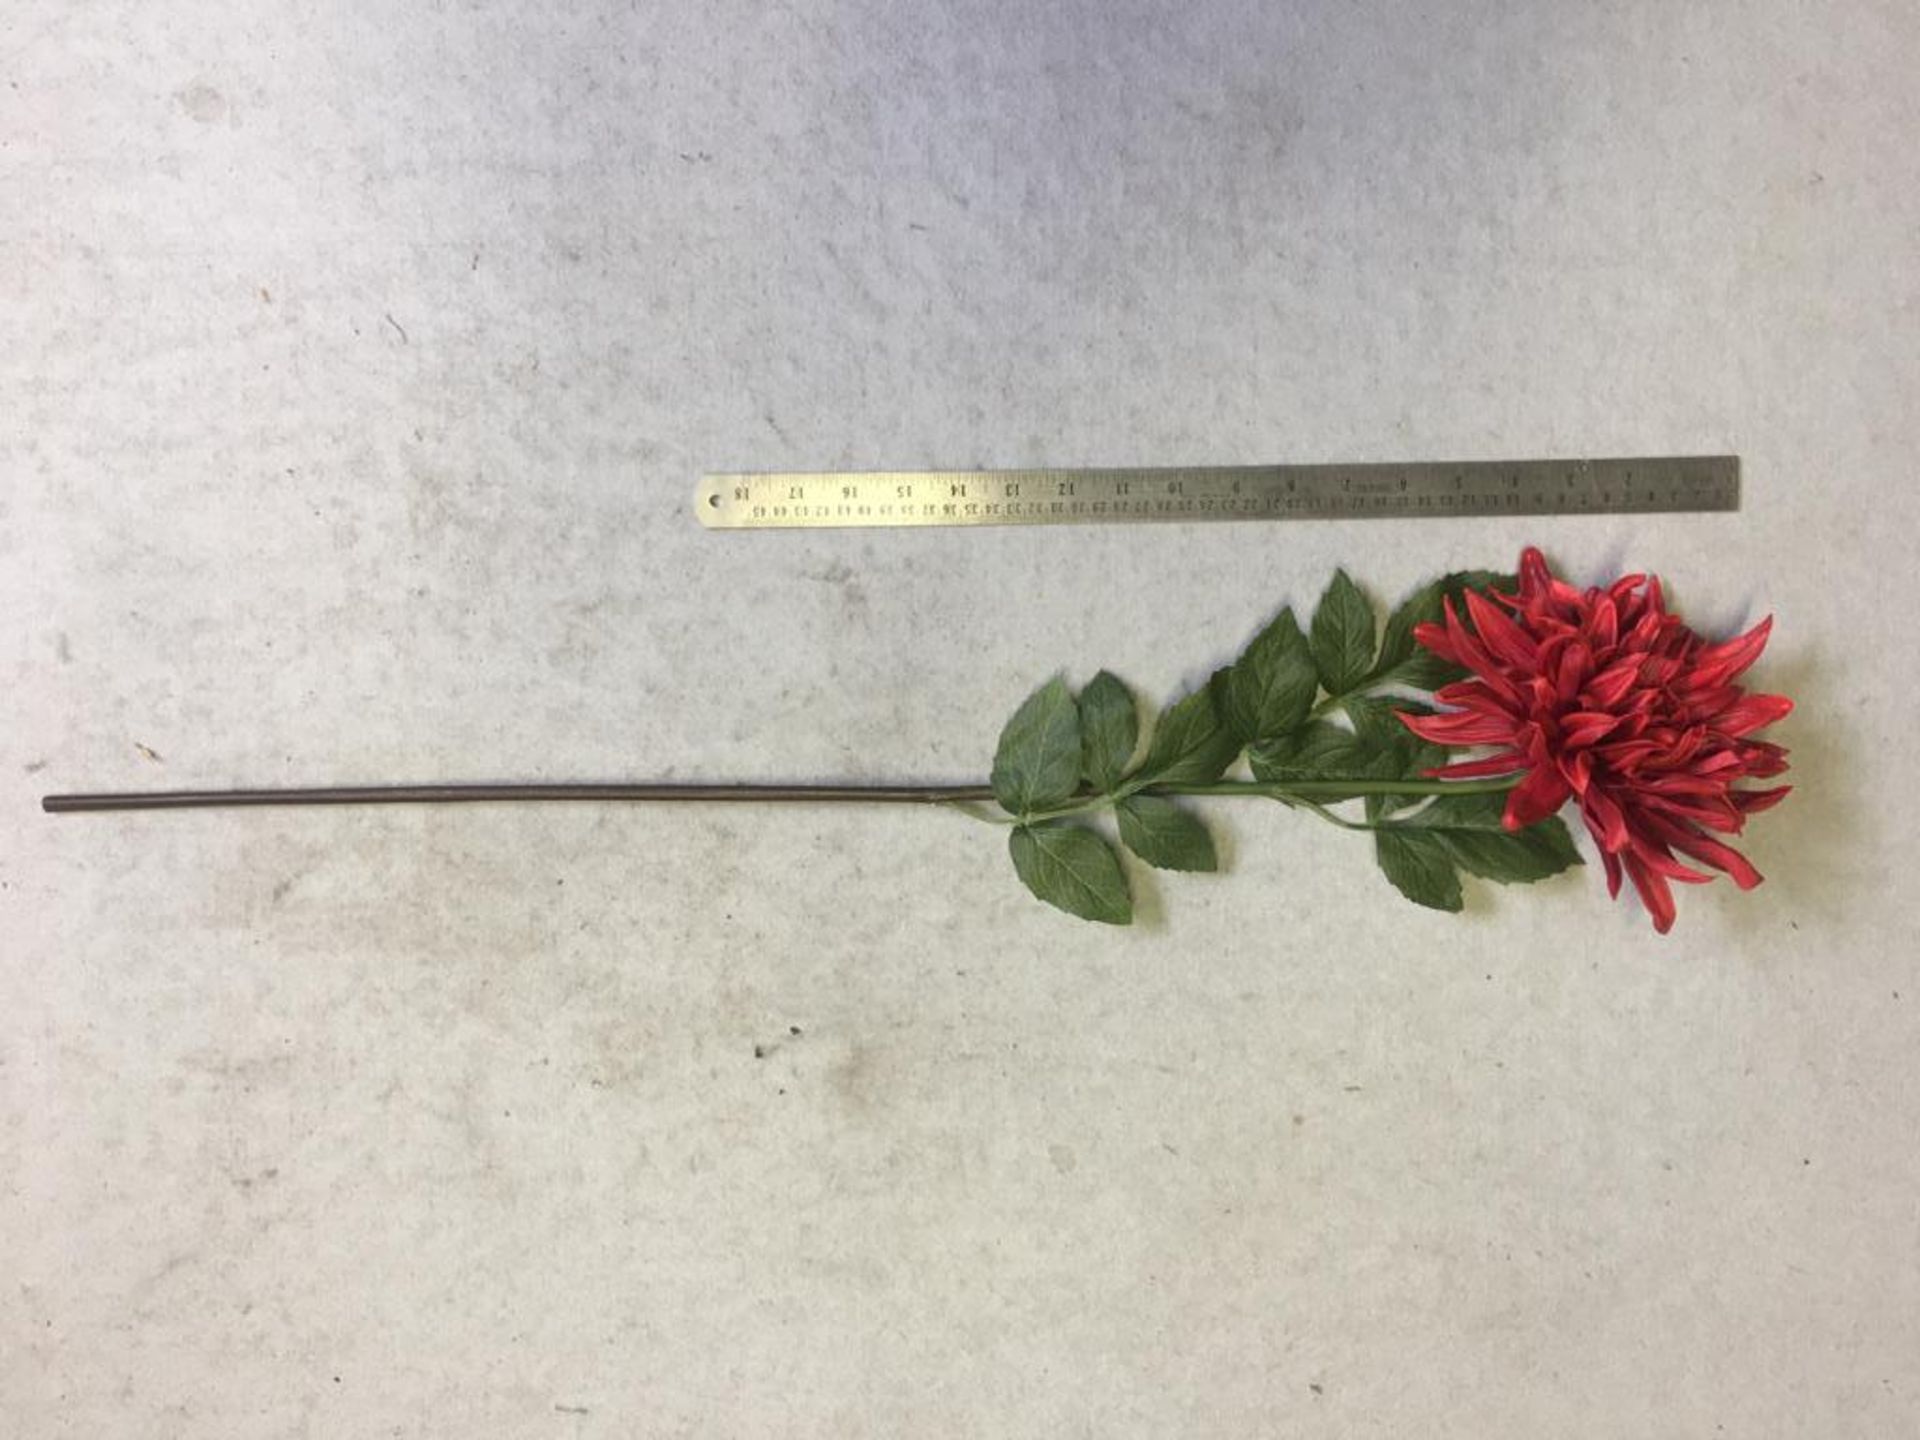 15 x Artificial Chrysanthemum stems - Red